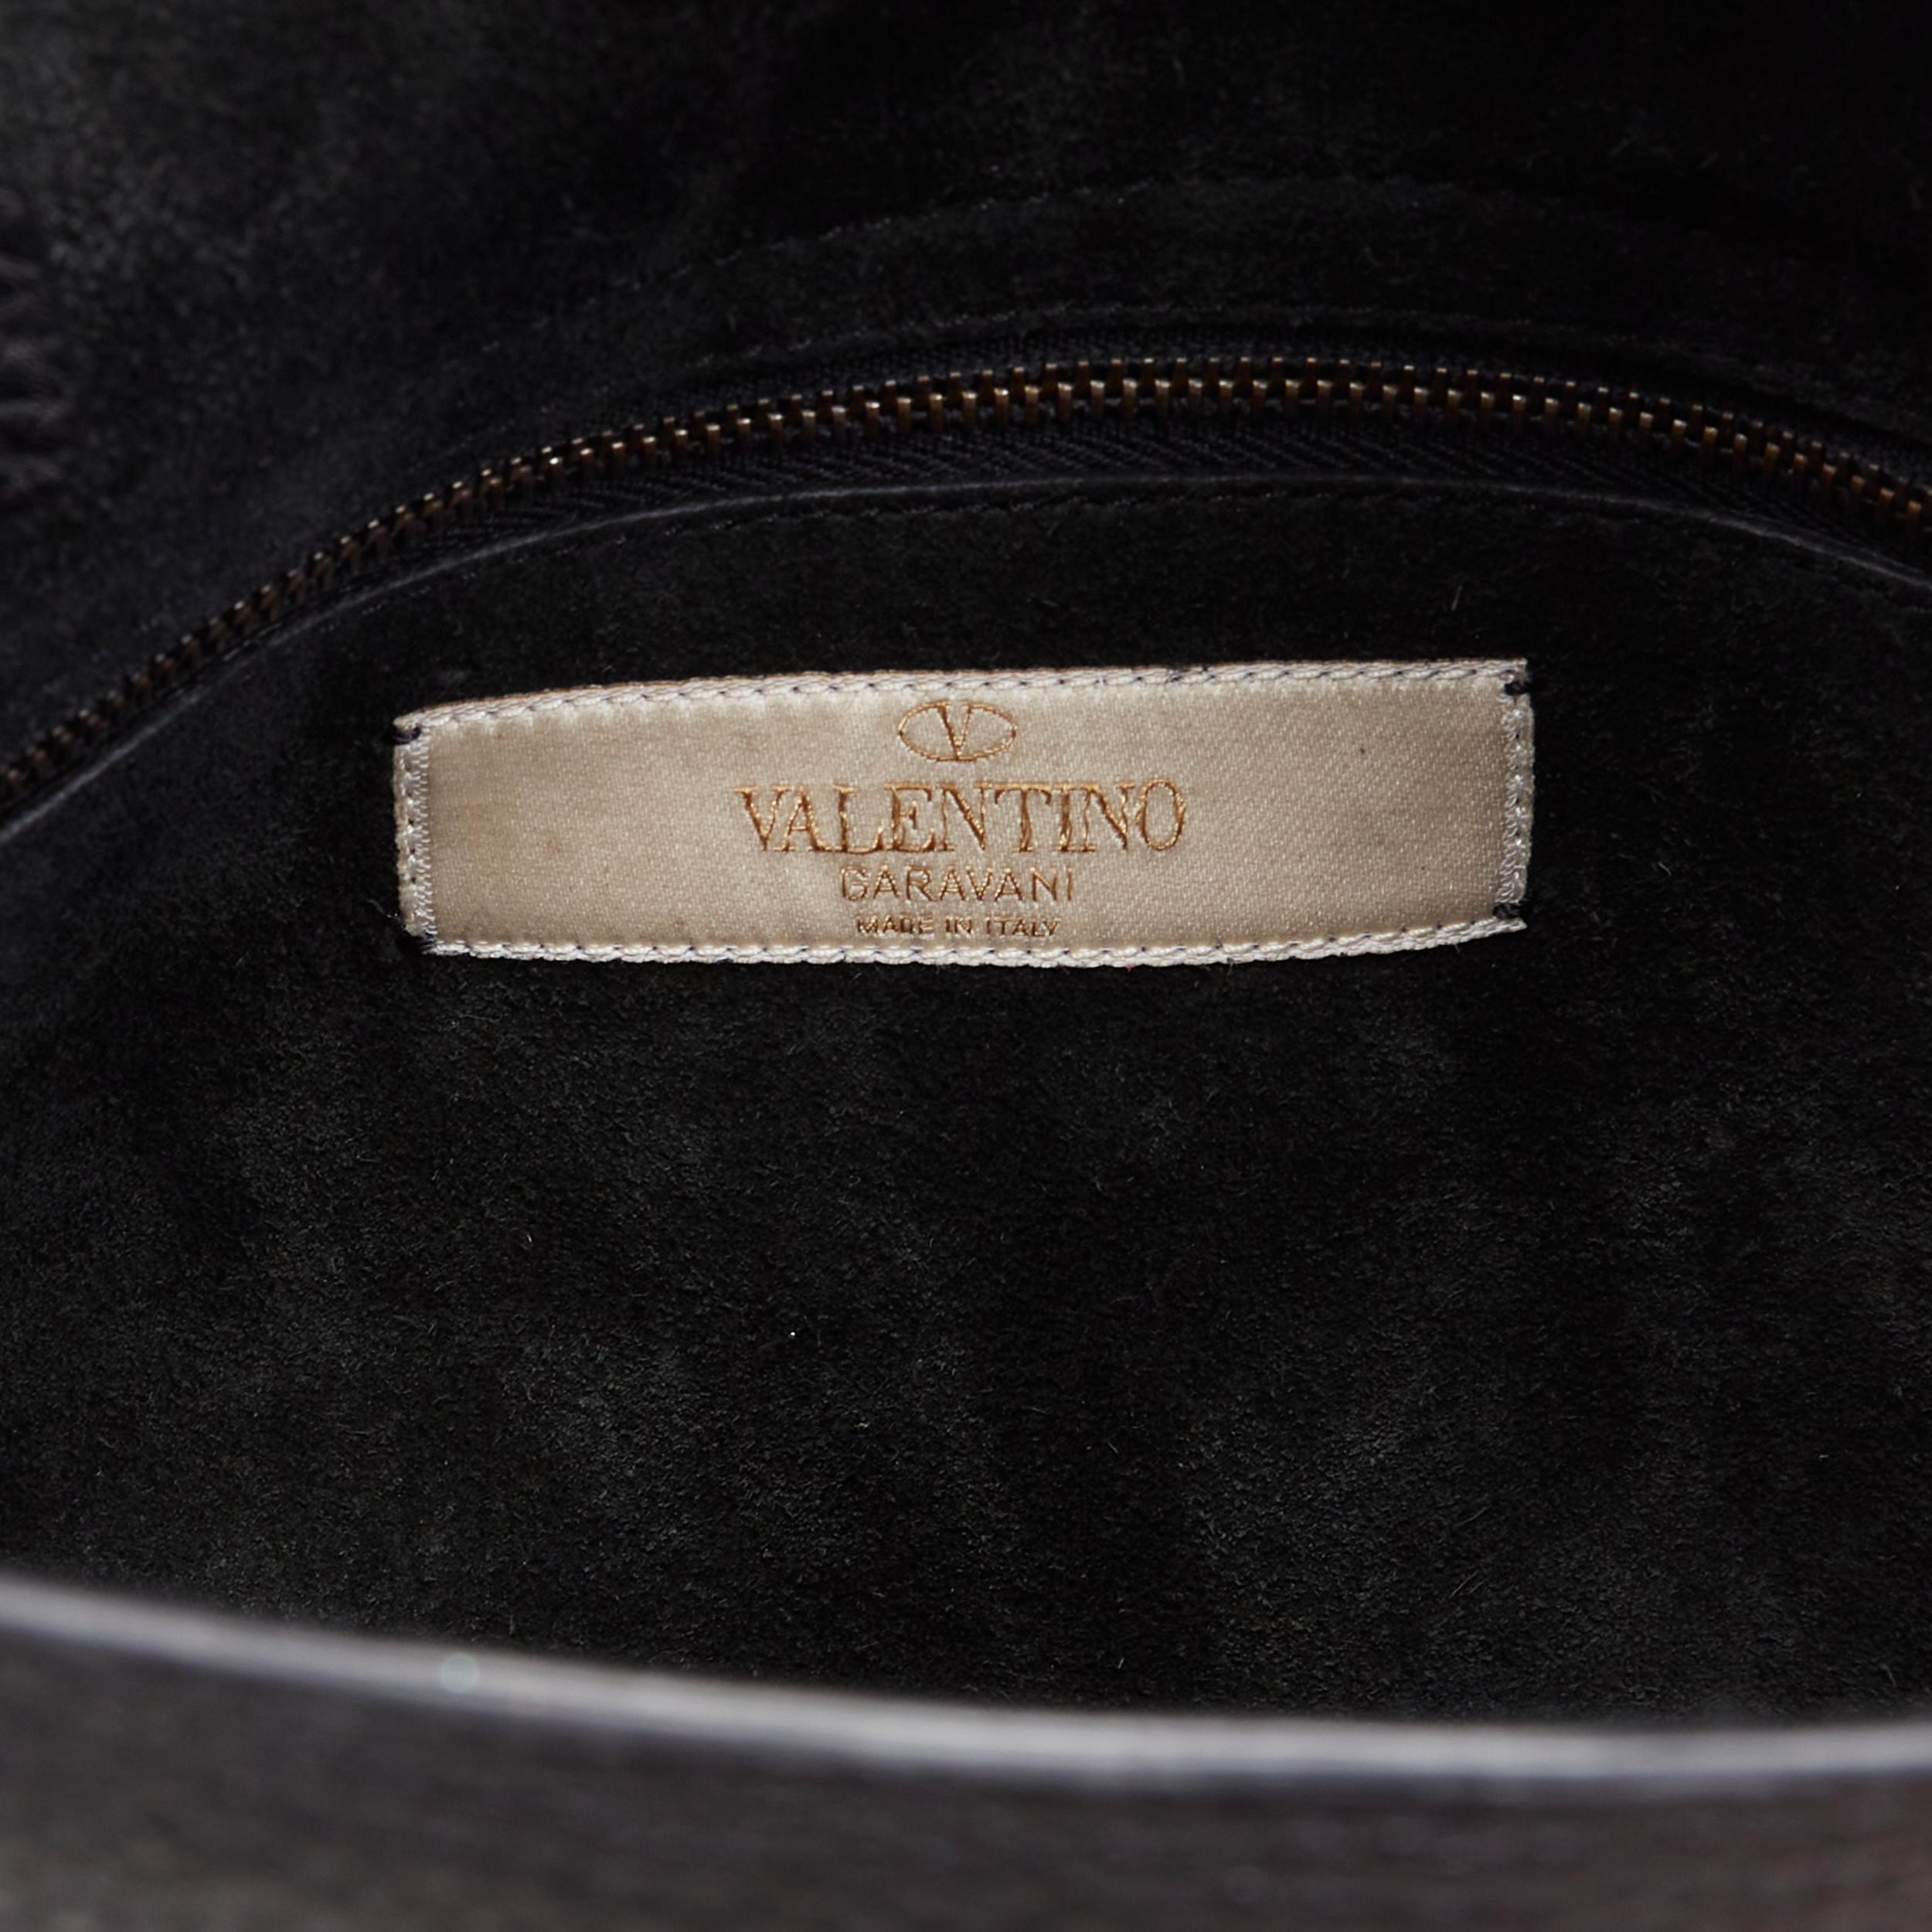 new VALENTINO black pebble leather turquoise stone Rockstud satchel shoulder bag 5